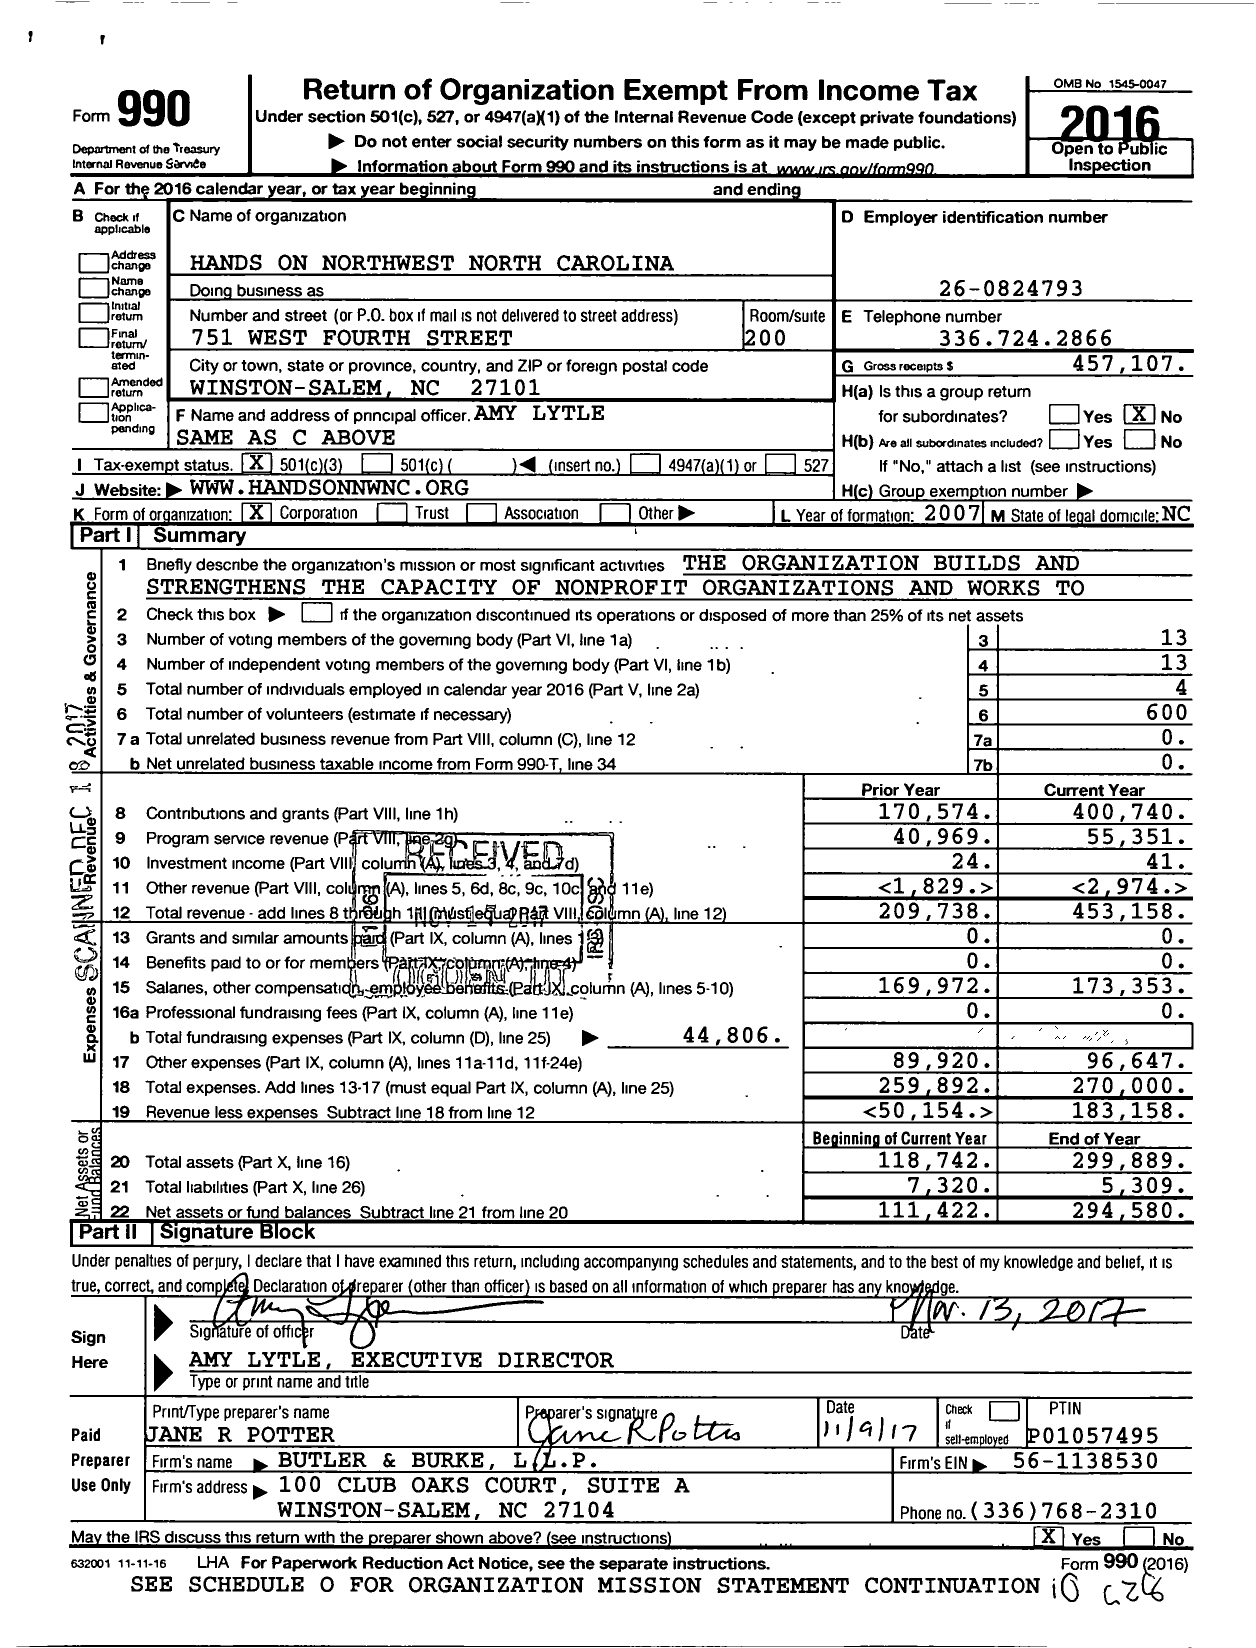 Image of first page of 2016 Form 990 for Handson Northwest North Carolina